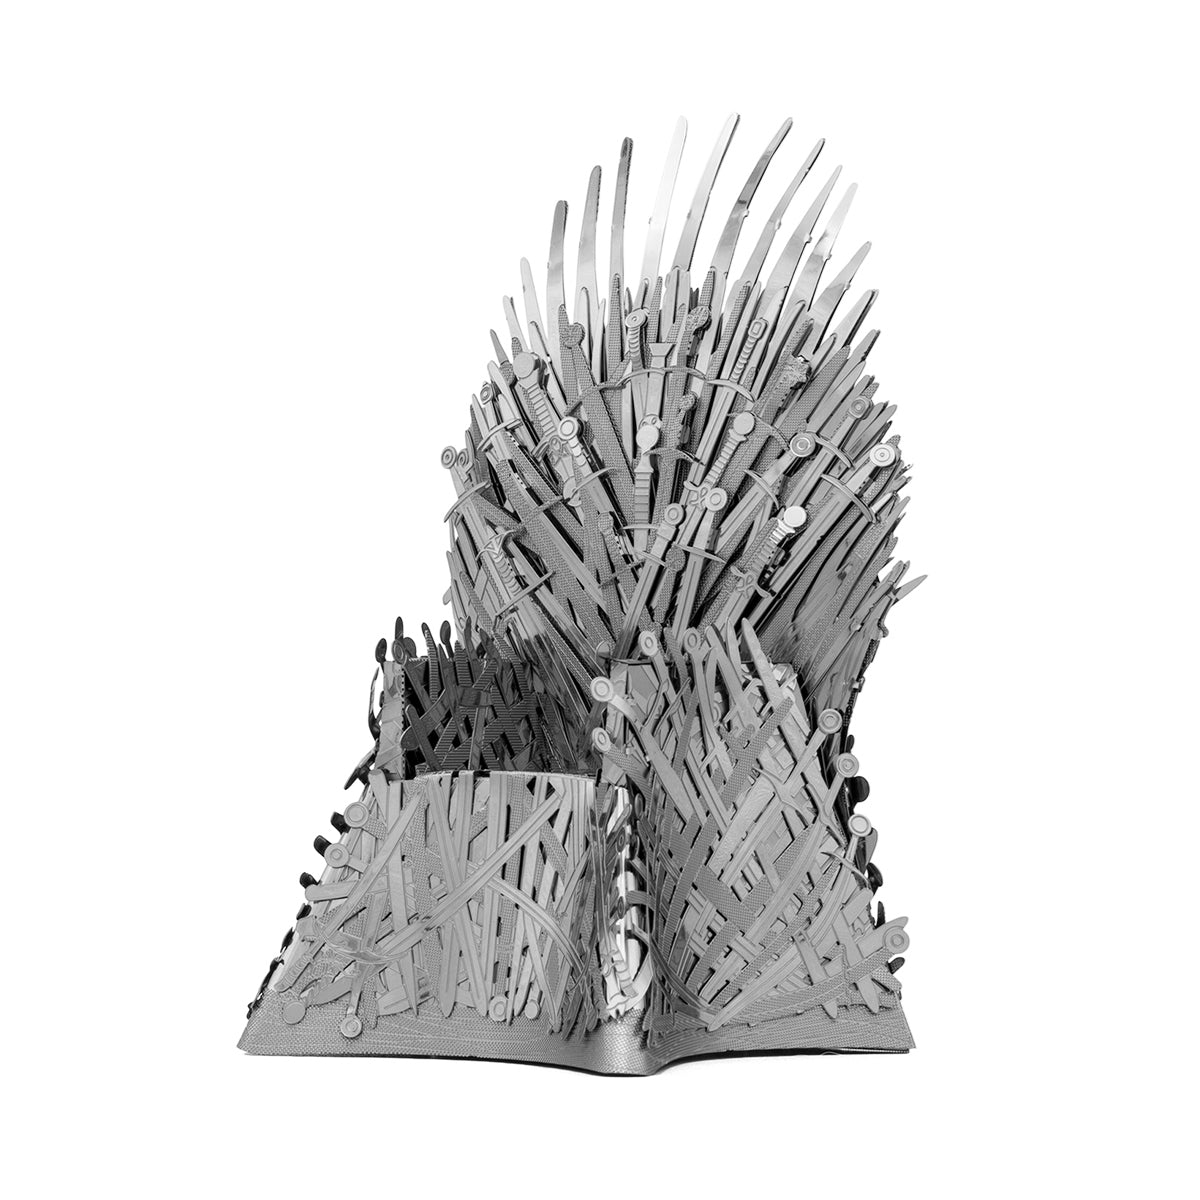 Metal Earth Premium Series Game of Thrones "Iron Throne" Metal Model Kit